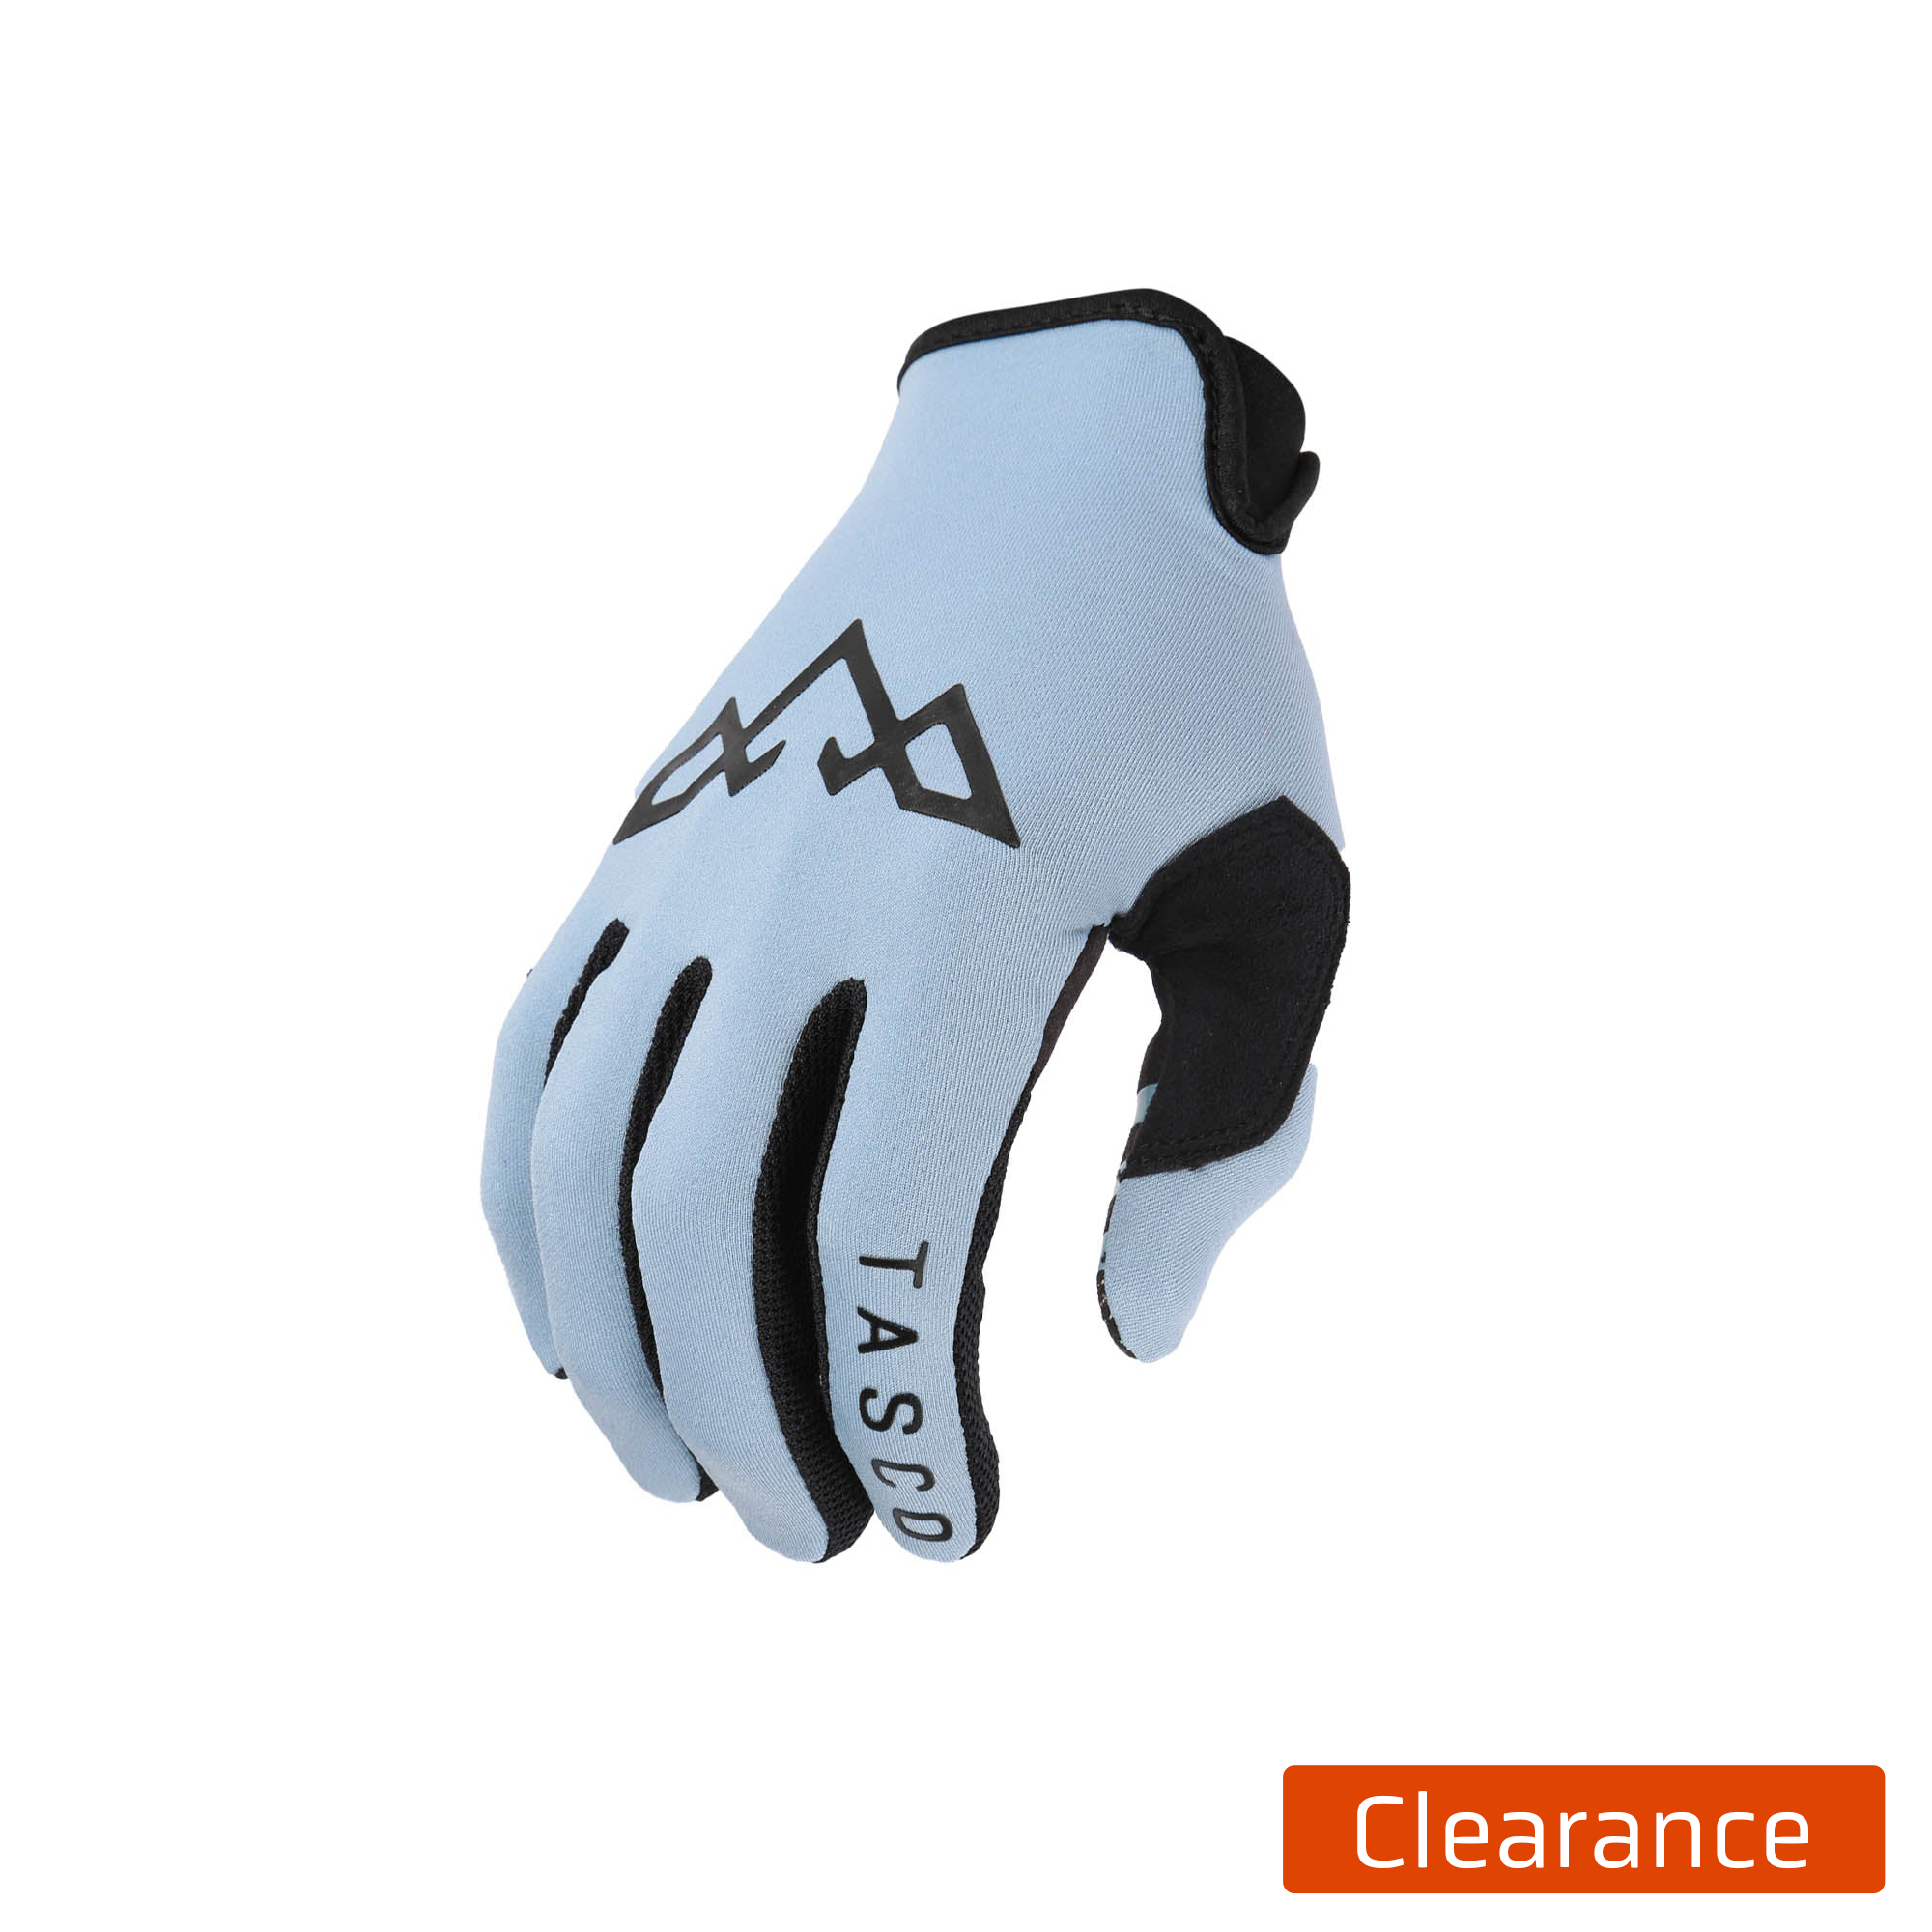 Ridgeline MTB Gloves - Powder (Size XS Only)